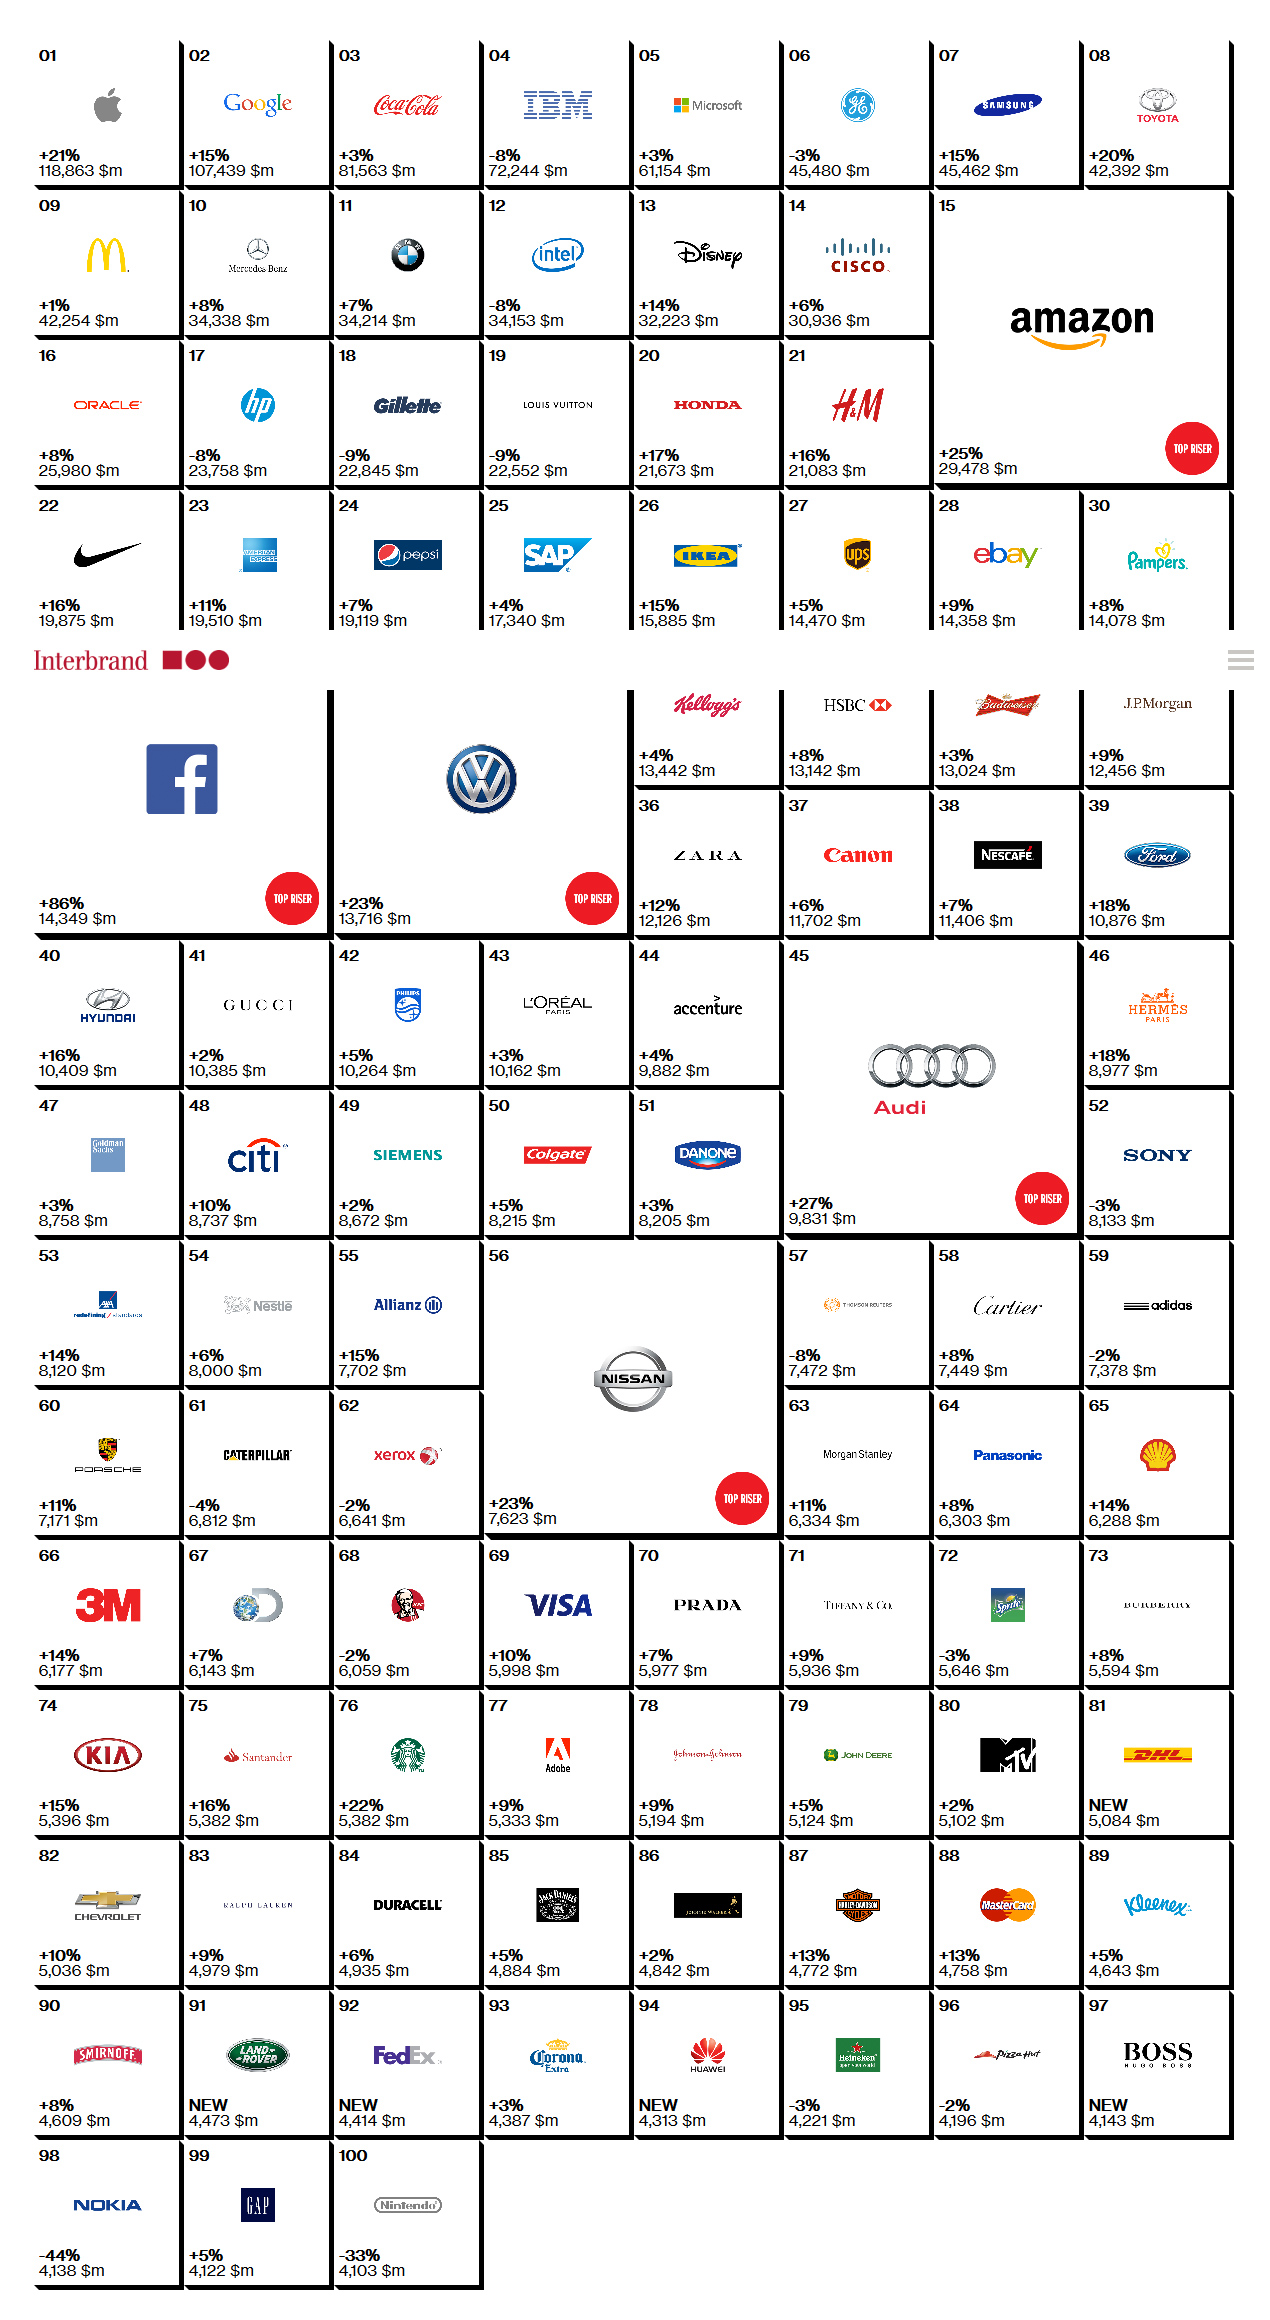 Küresel Markalar Raporu 2014